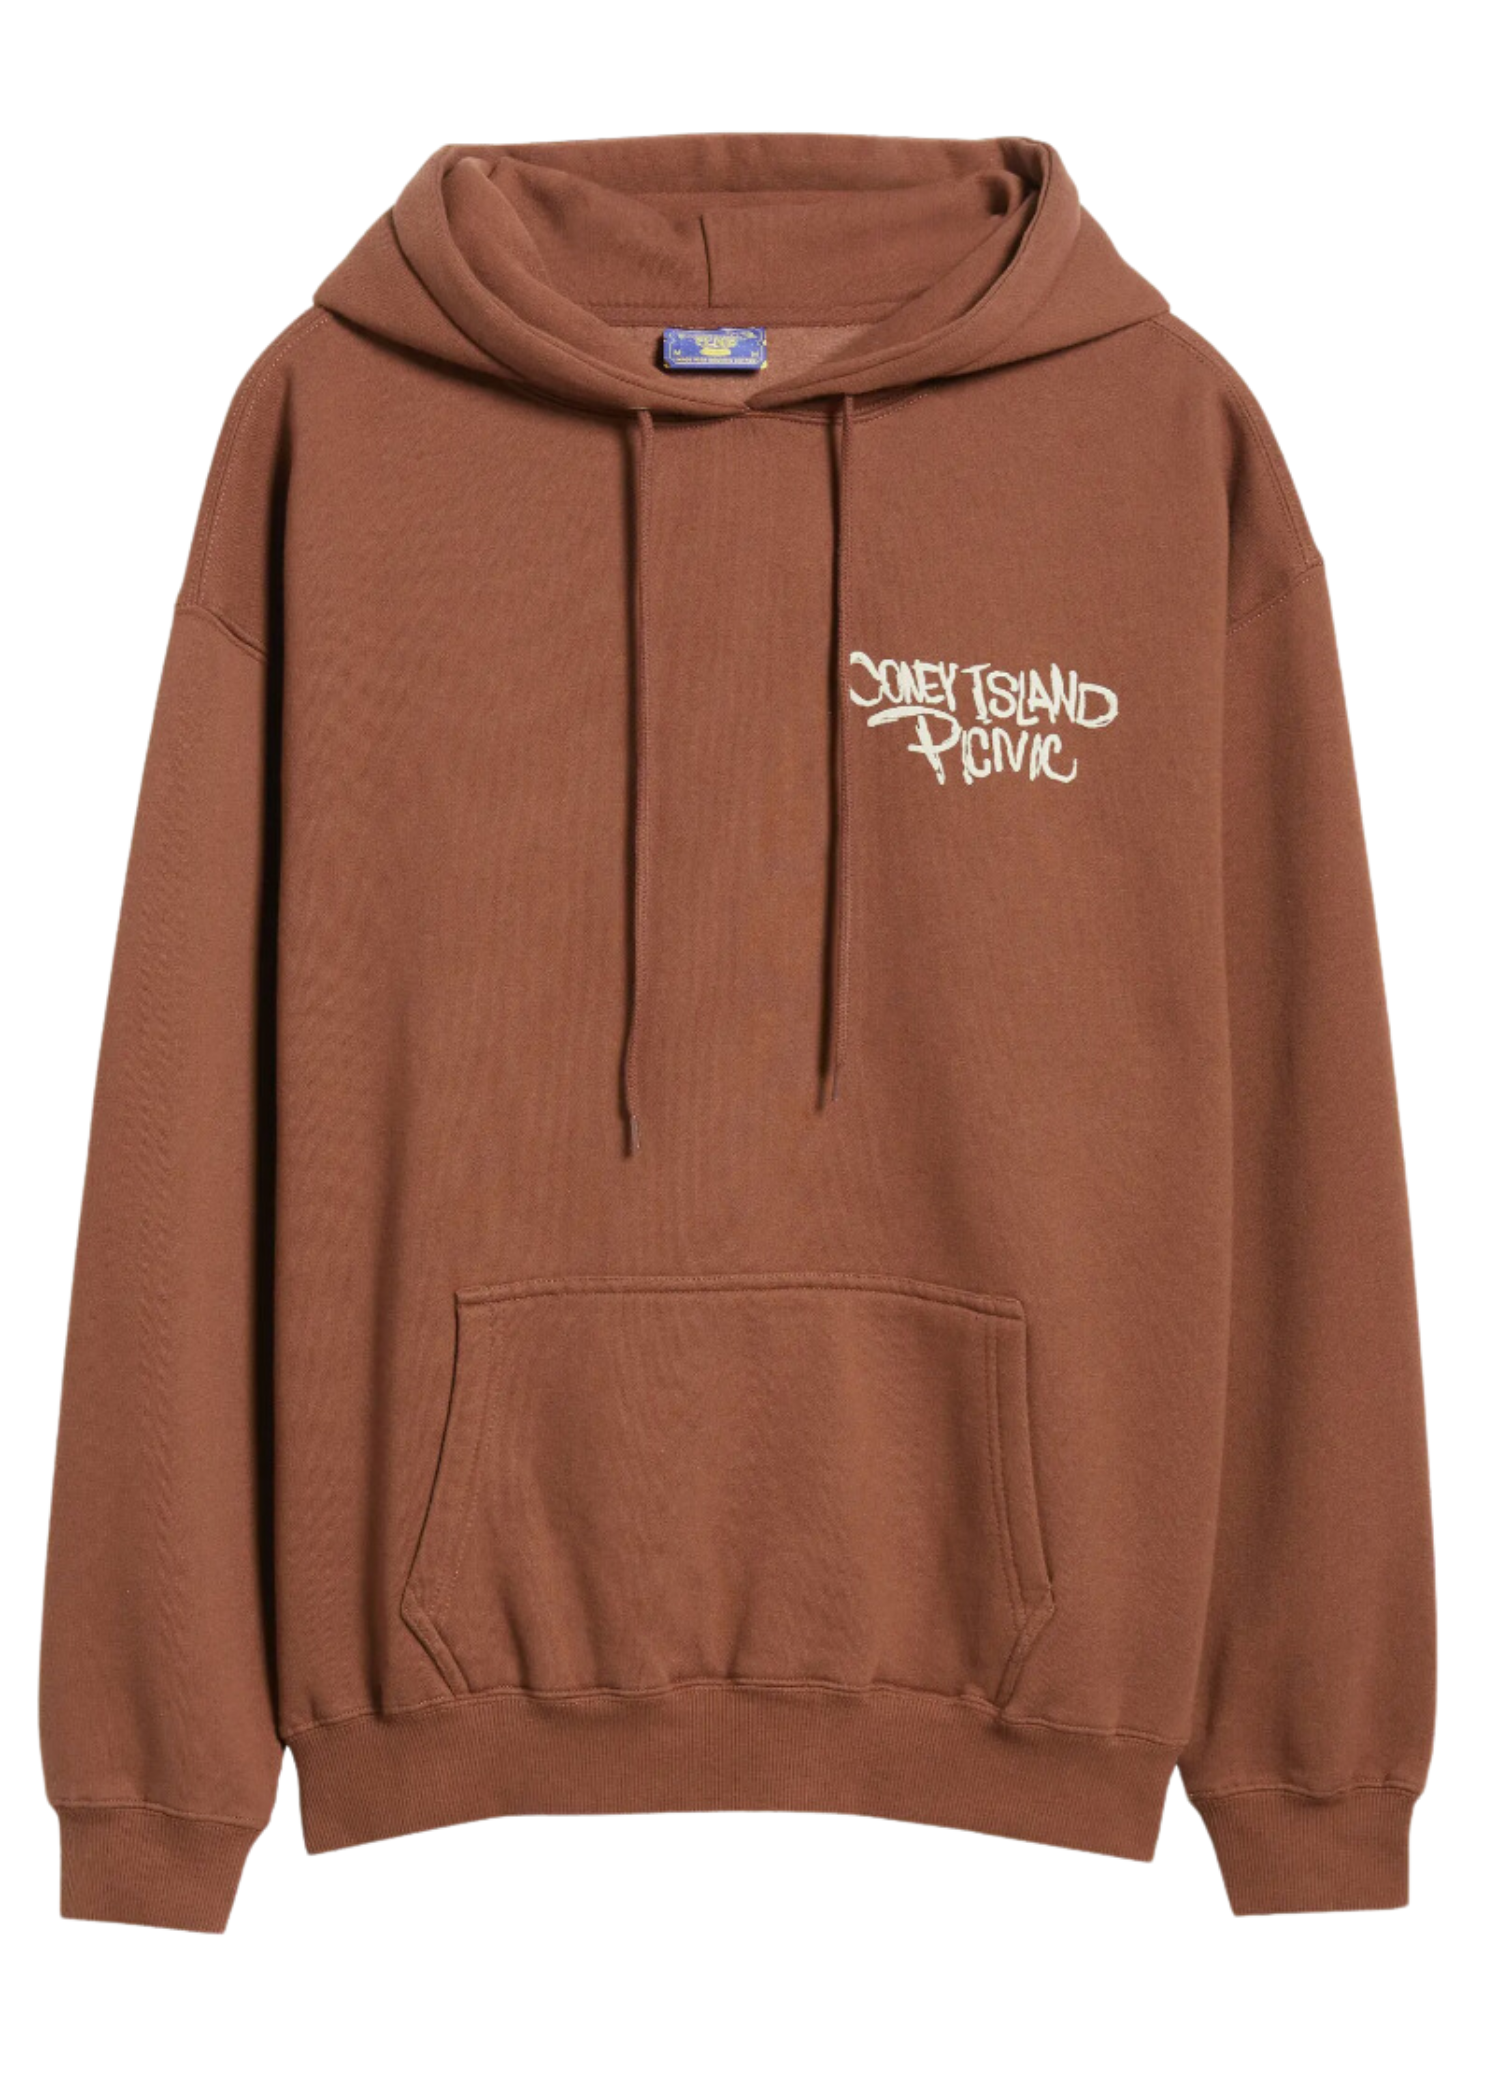 Graphic Hoodies & Sweatshirts - Shop Unique Styles – Coney Island Picnic